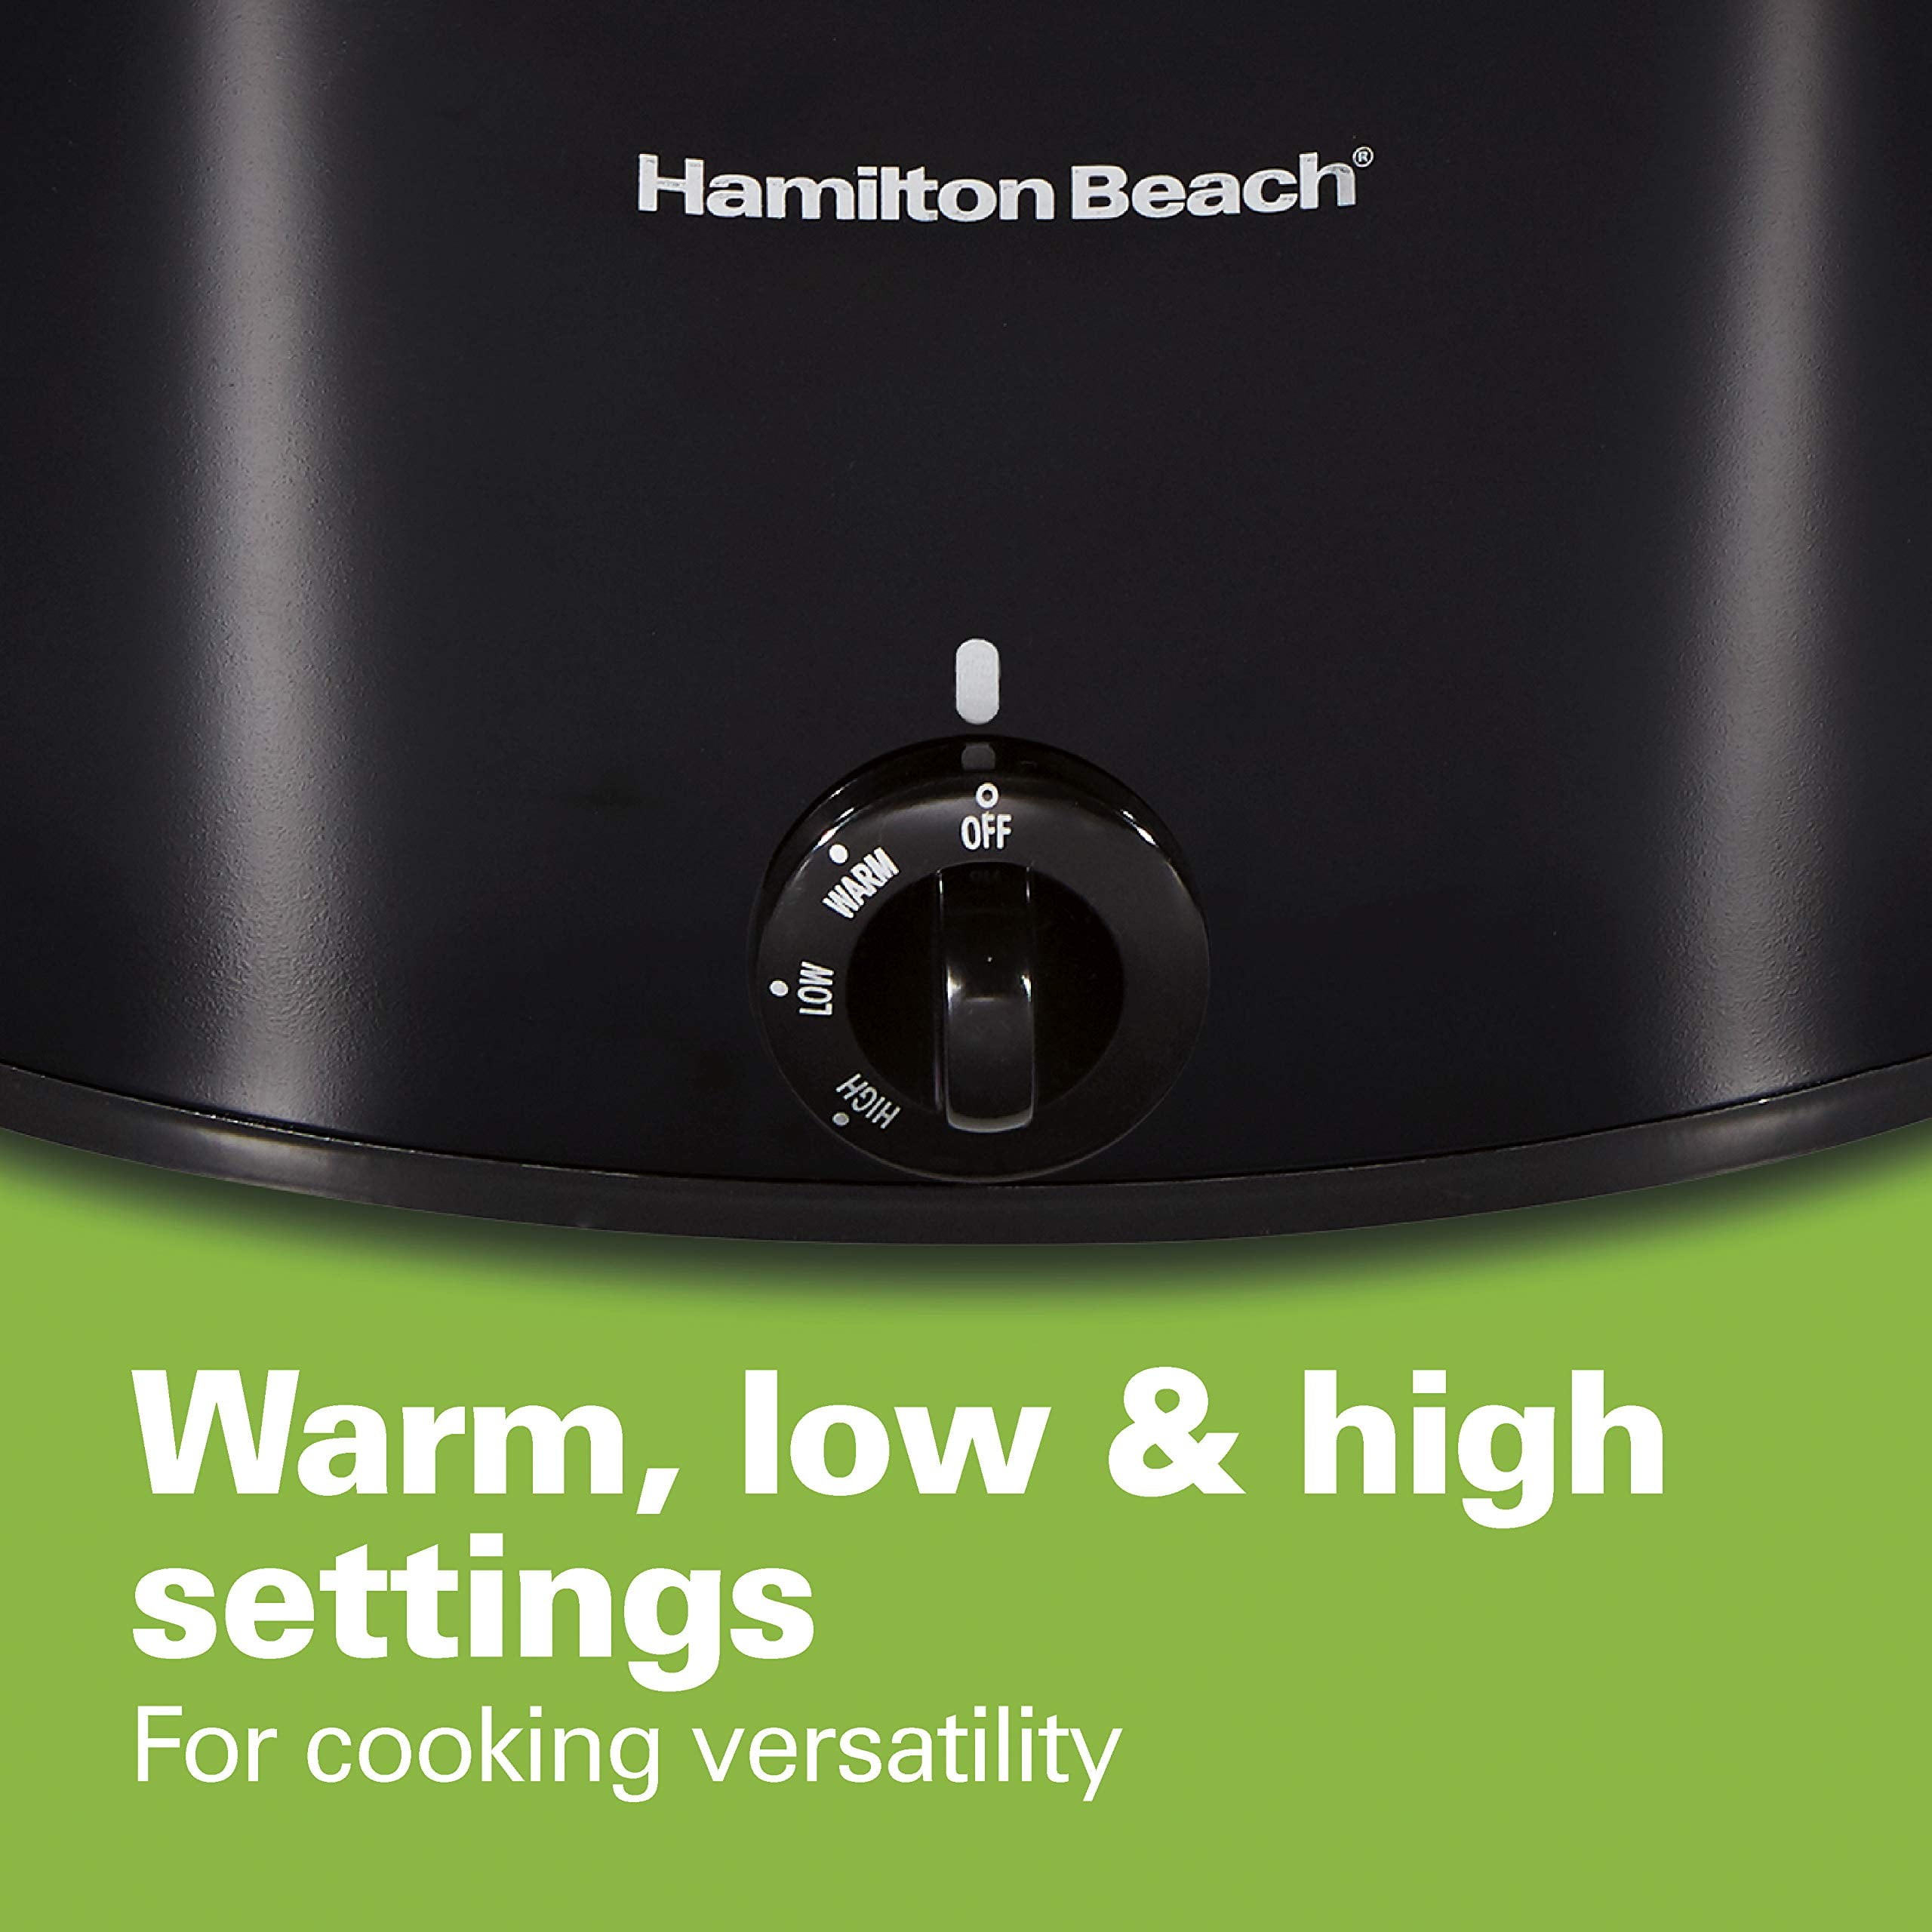 Hamilton Beach® 10 Quart Slow Cooker’s